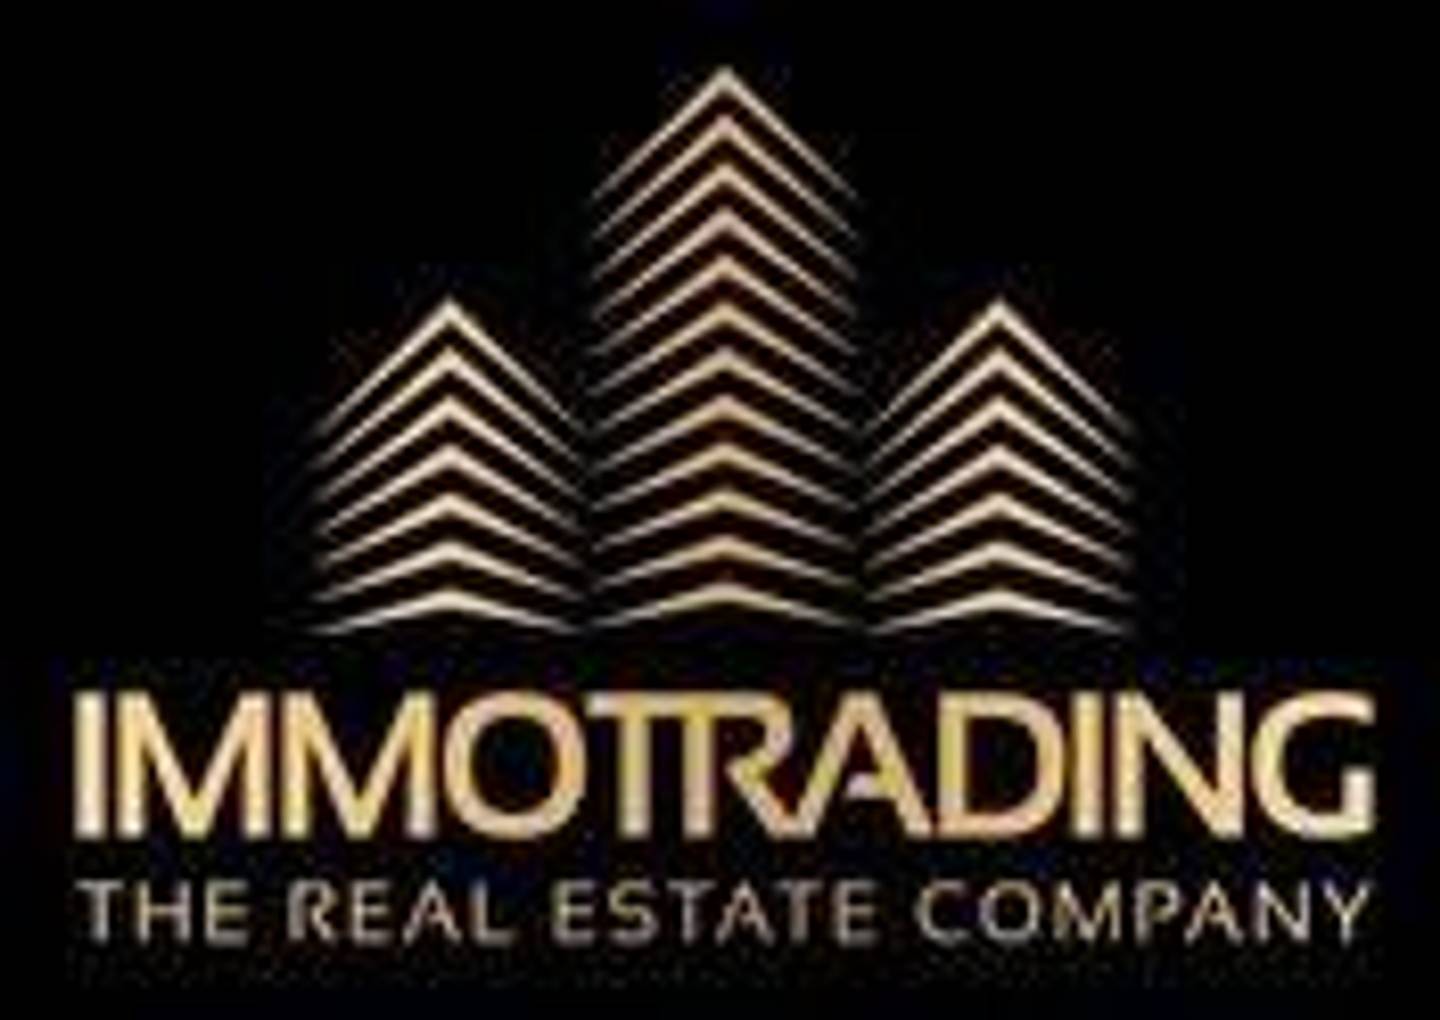 Logo ImmoTrading GmbH